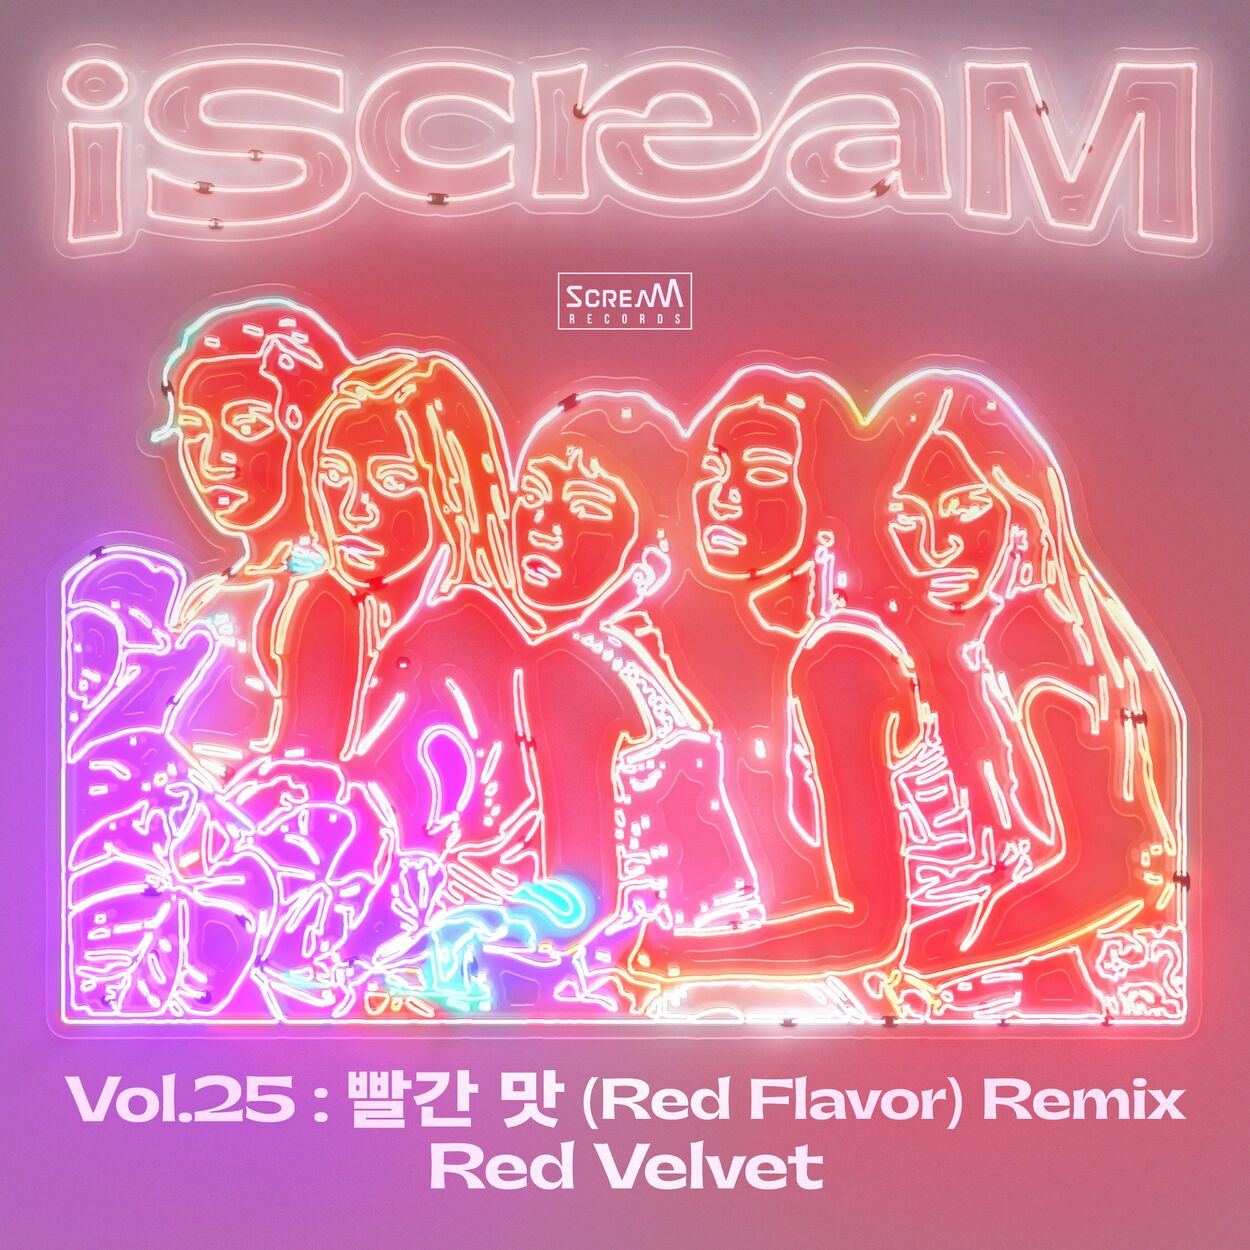 Red Velvet – iScreaM Vol.25 : 빨간 맛 Red Flavor Remix – Single